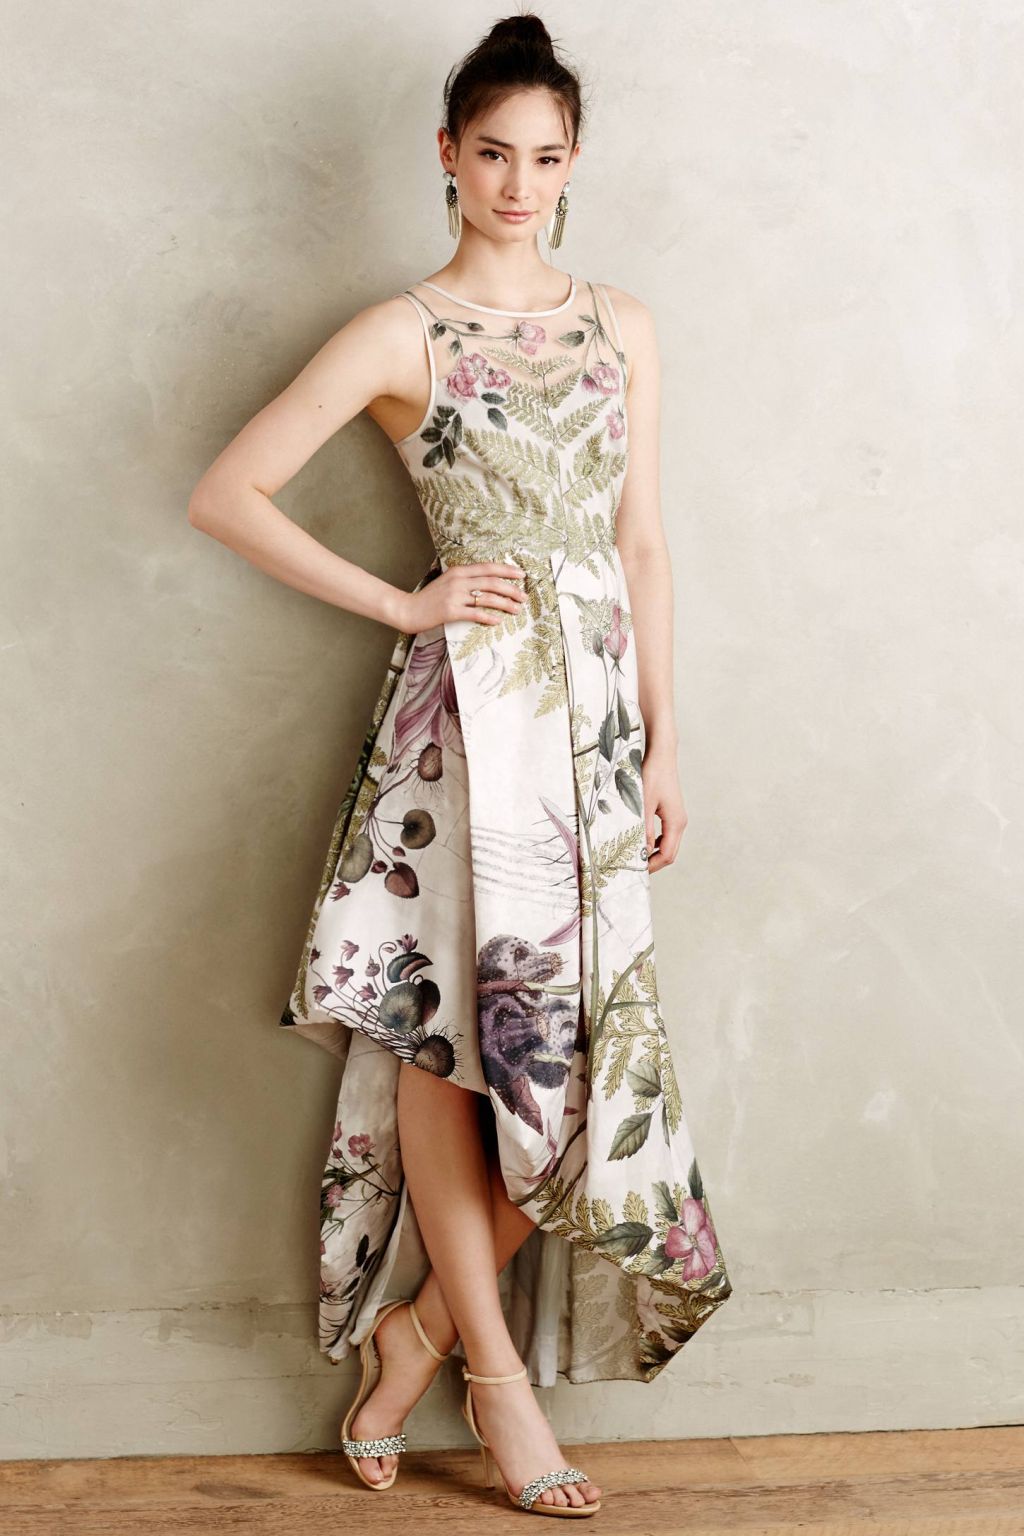 Azores Dress by Geisha Designs